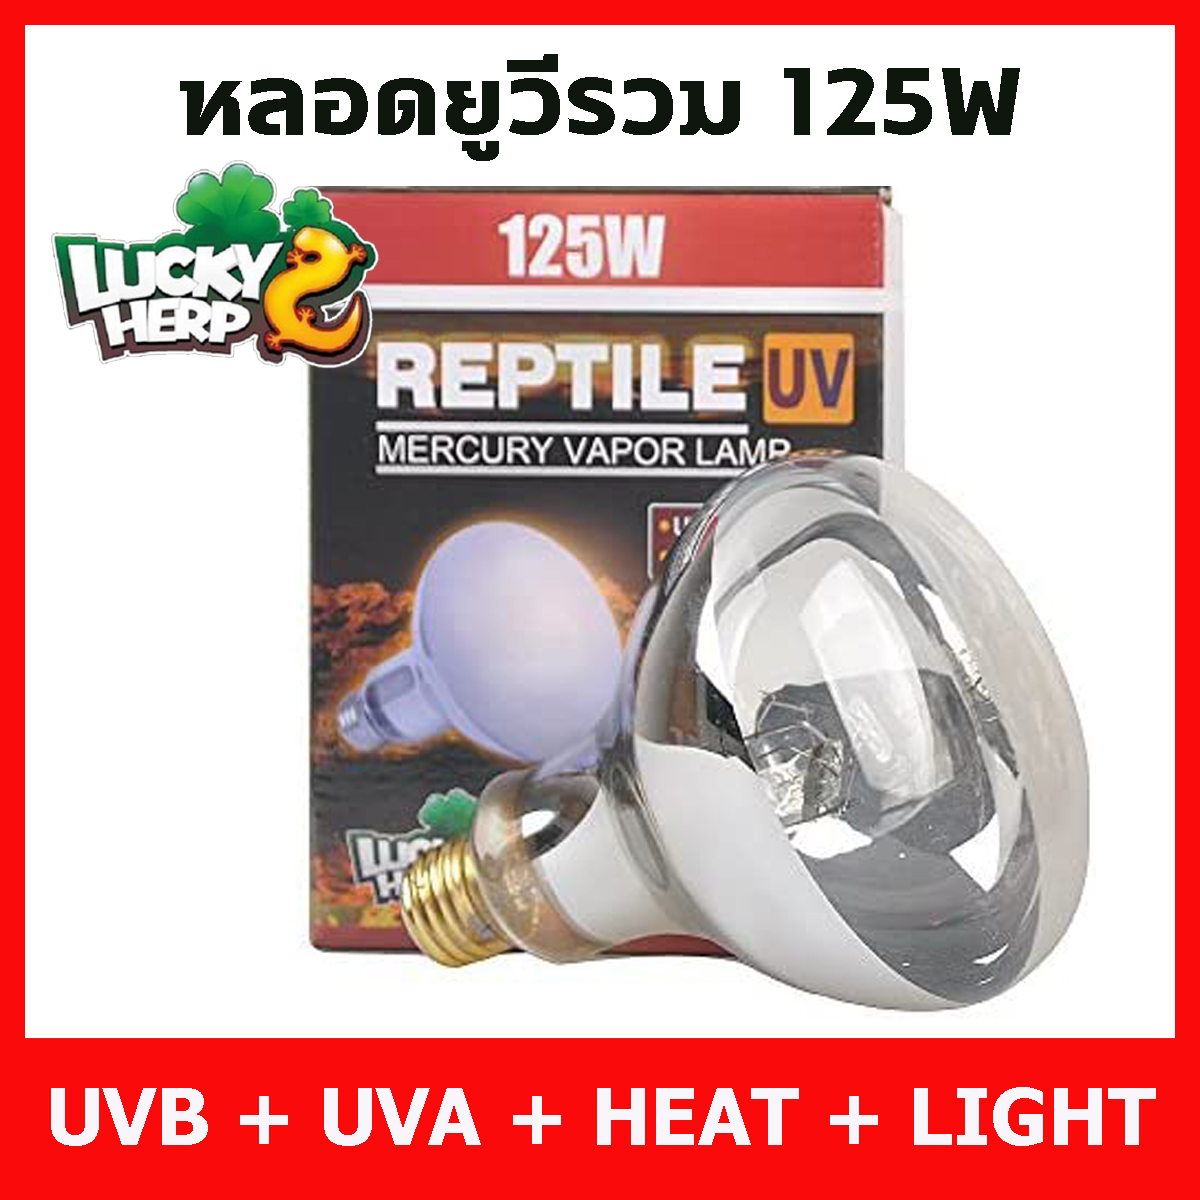 Lucky Herp Reptile UVA UVB Heat Lamp 125W หลอดรวมยูวีและความร้อน ครบทุกอย่างในหลอดเดียว สำหรับสัตว์เลื้อยคลานและสัตว์ชนิดต่างๆที่ต้องการยูวี หลอดไฟ ยูวี